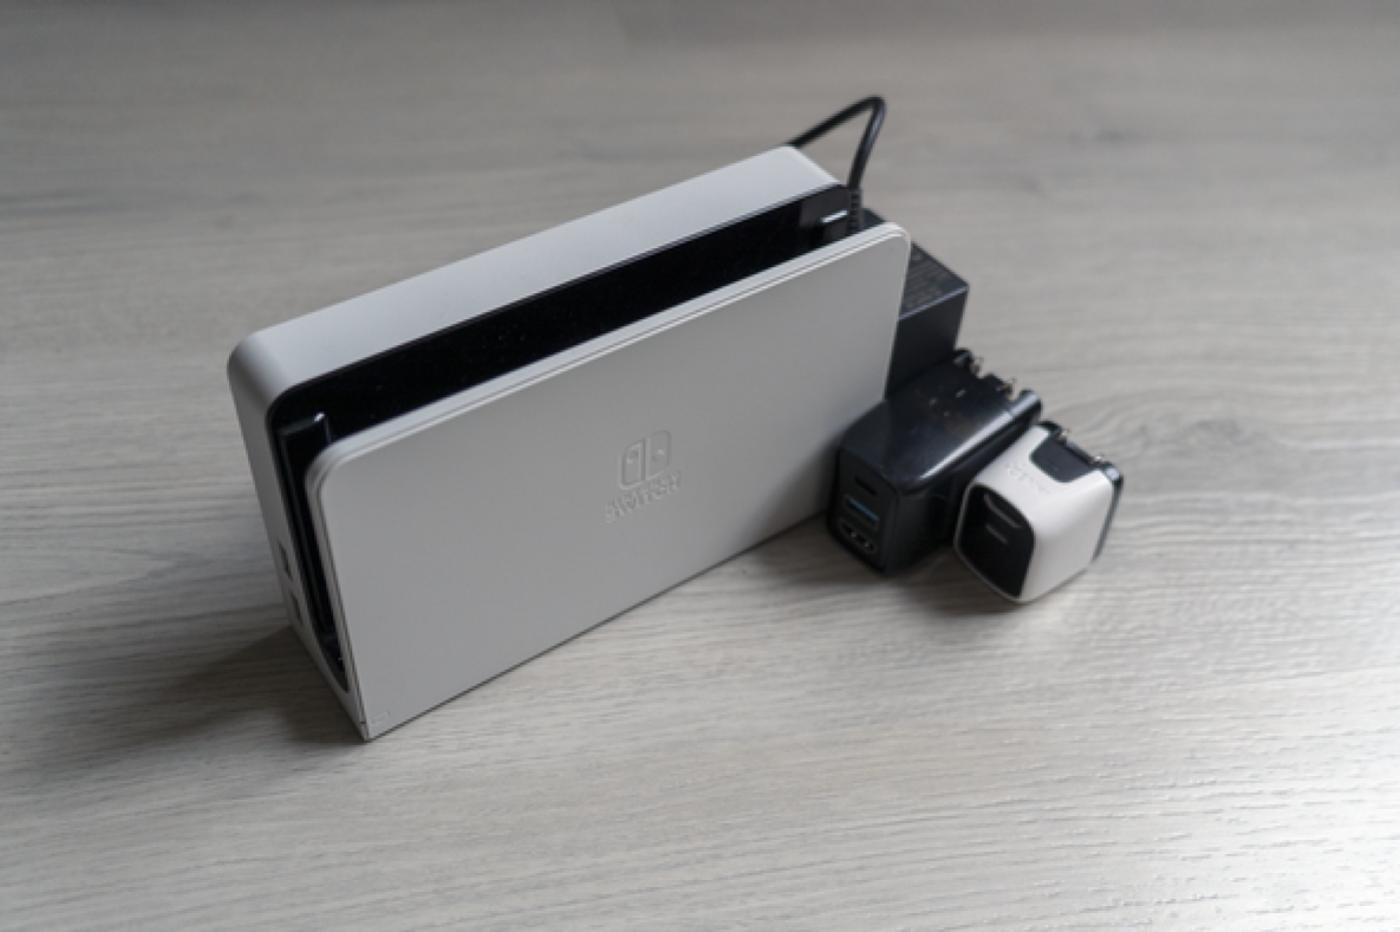 Steelplay Nintendo Switch Mini Dock USB-C/HDMI Adapter au meilleur